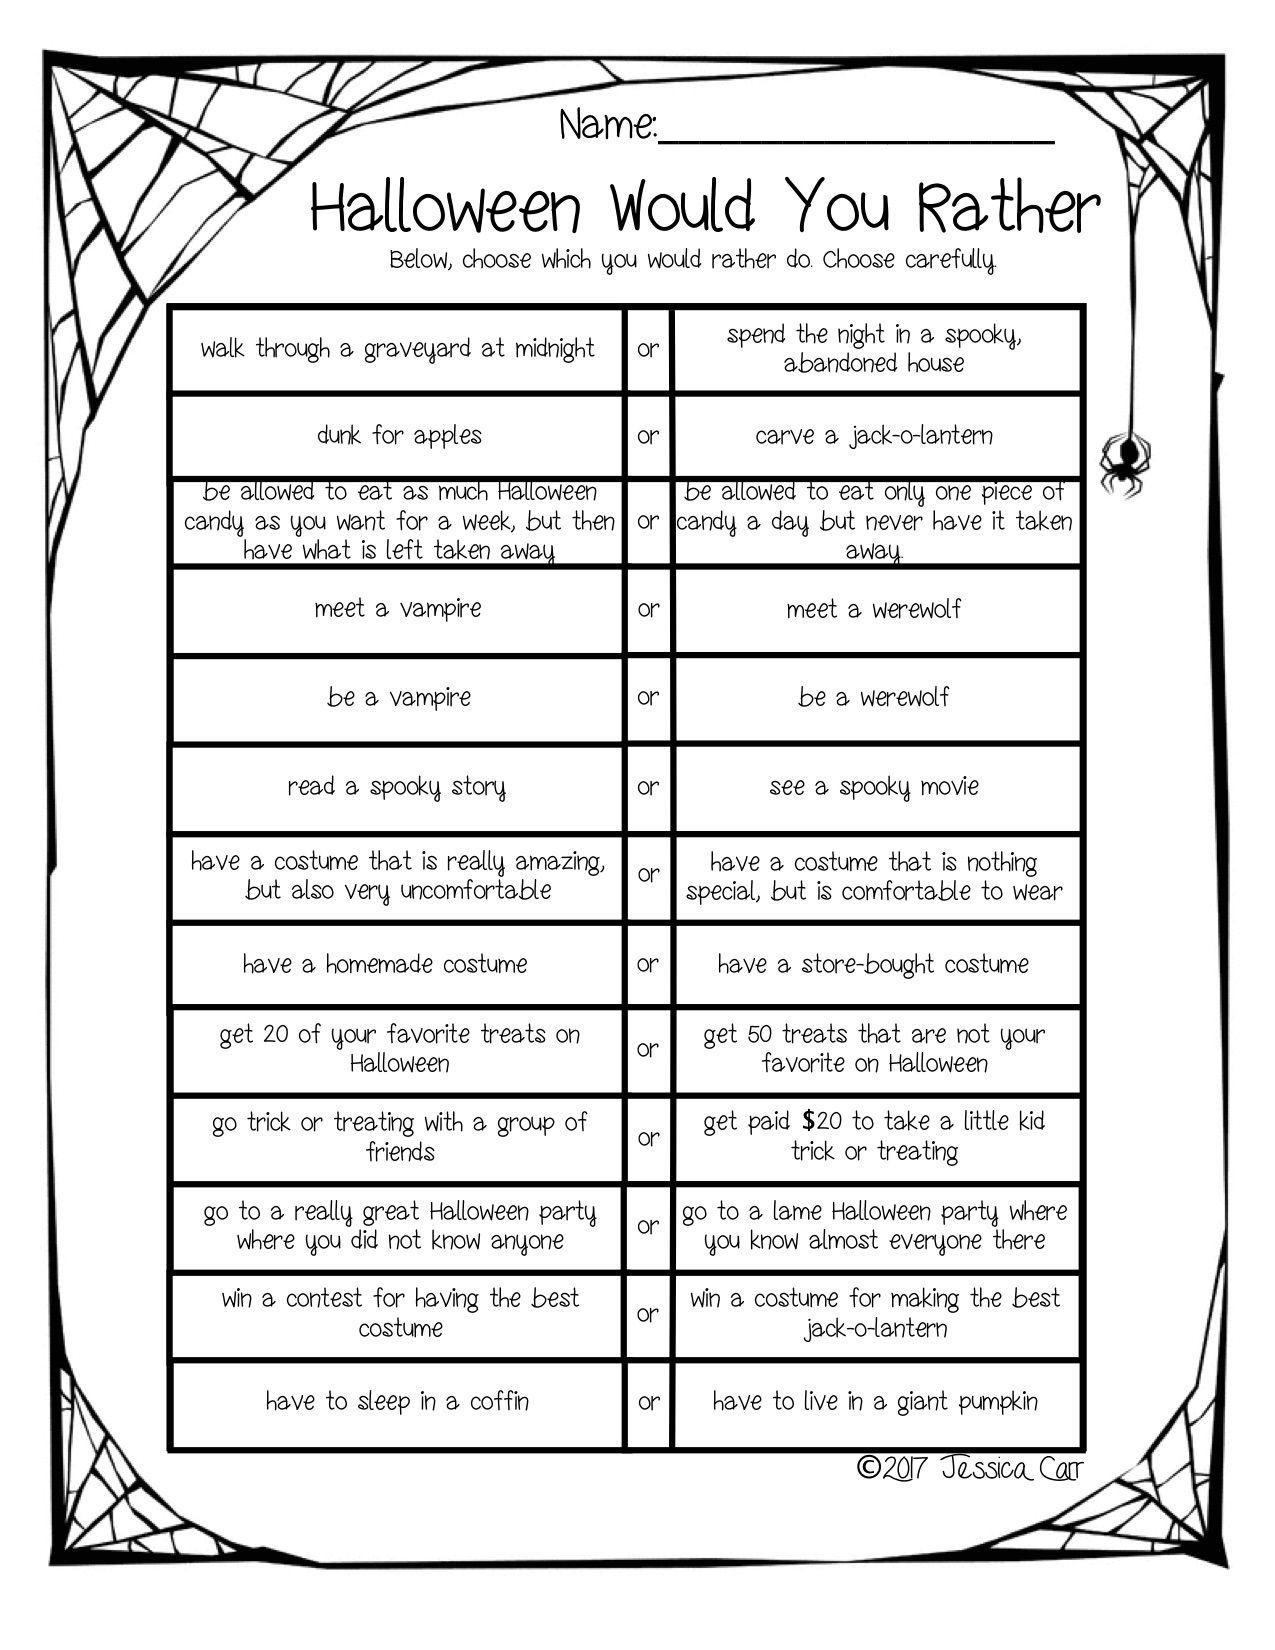 Grammar Corner Halloween Would You Rather